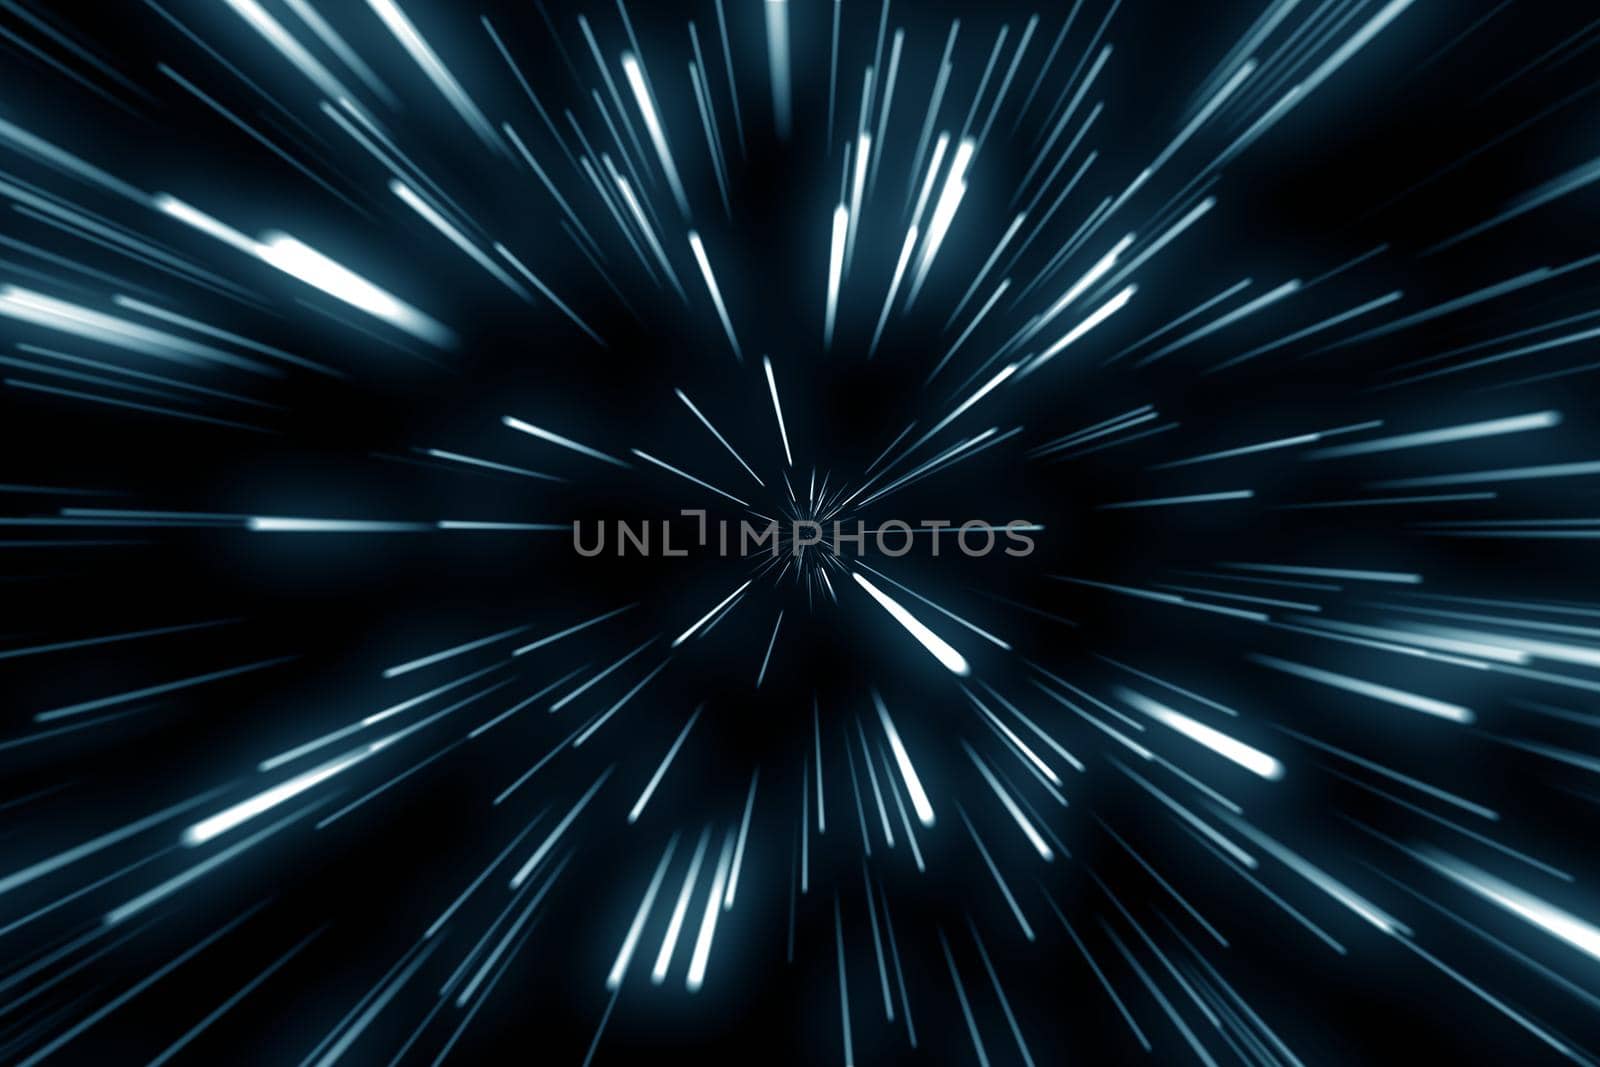 ump at superluminal speed between the stars